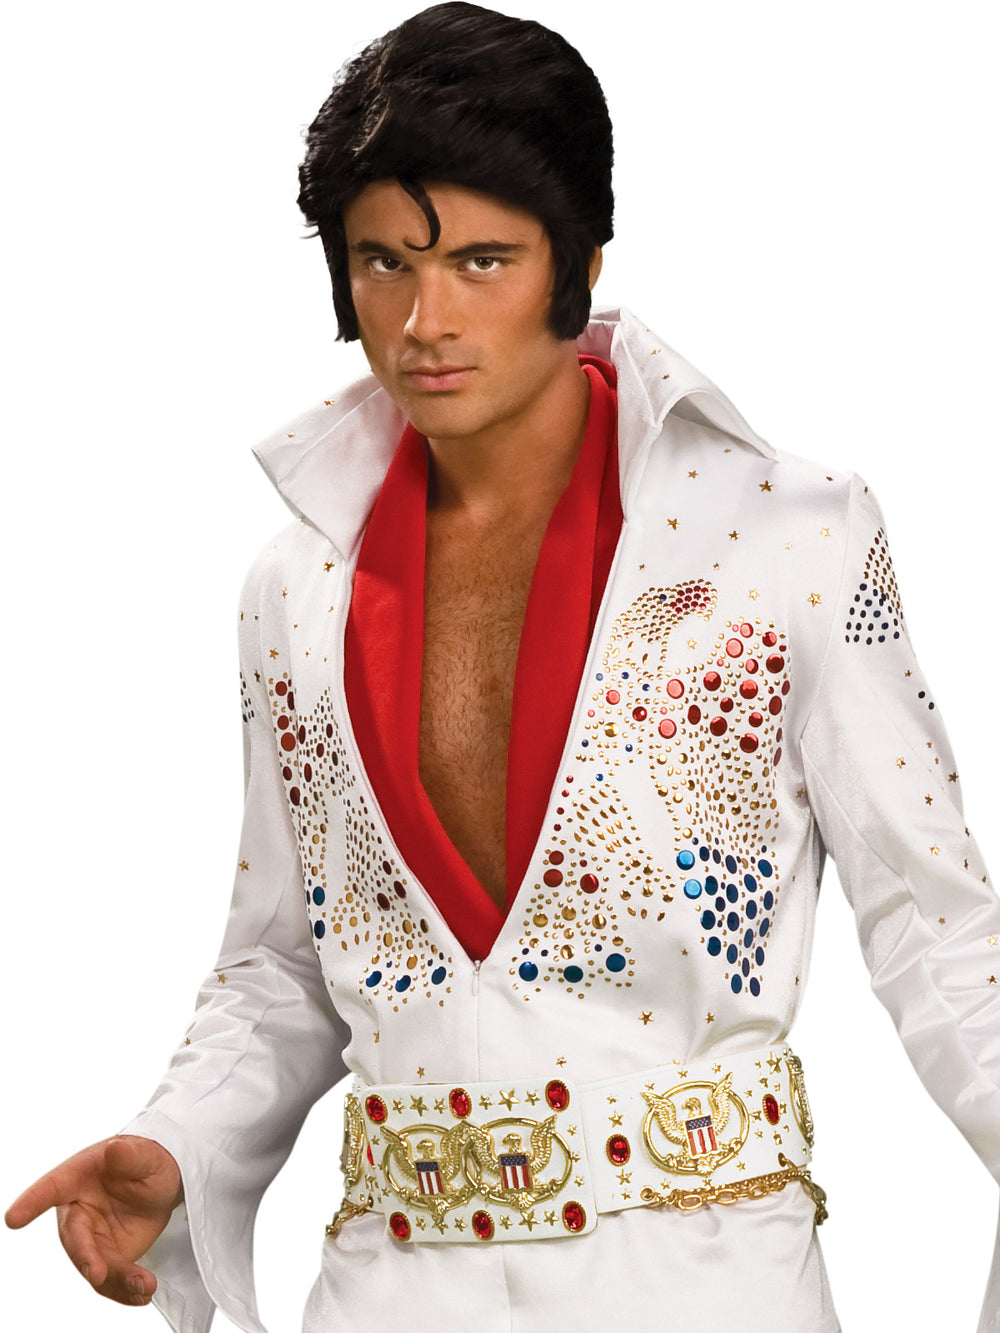 Elvis Collectors Edition - Little Shop of Horrors